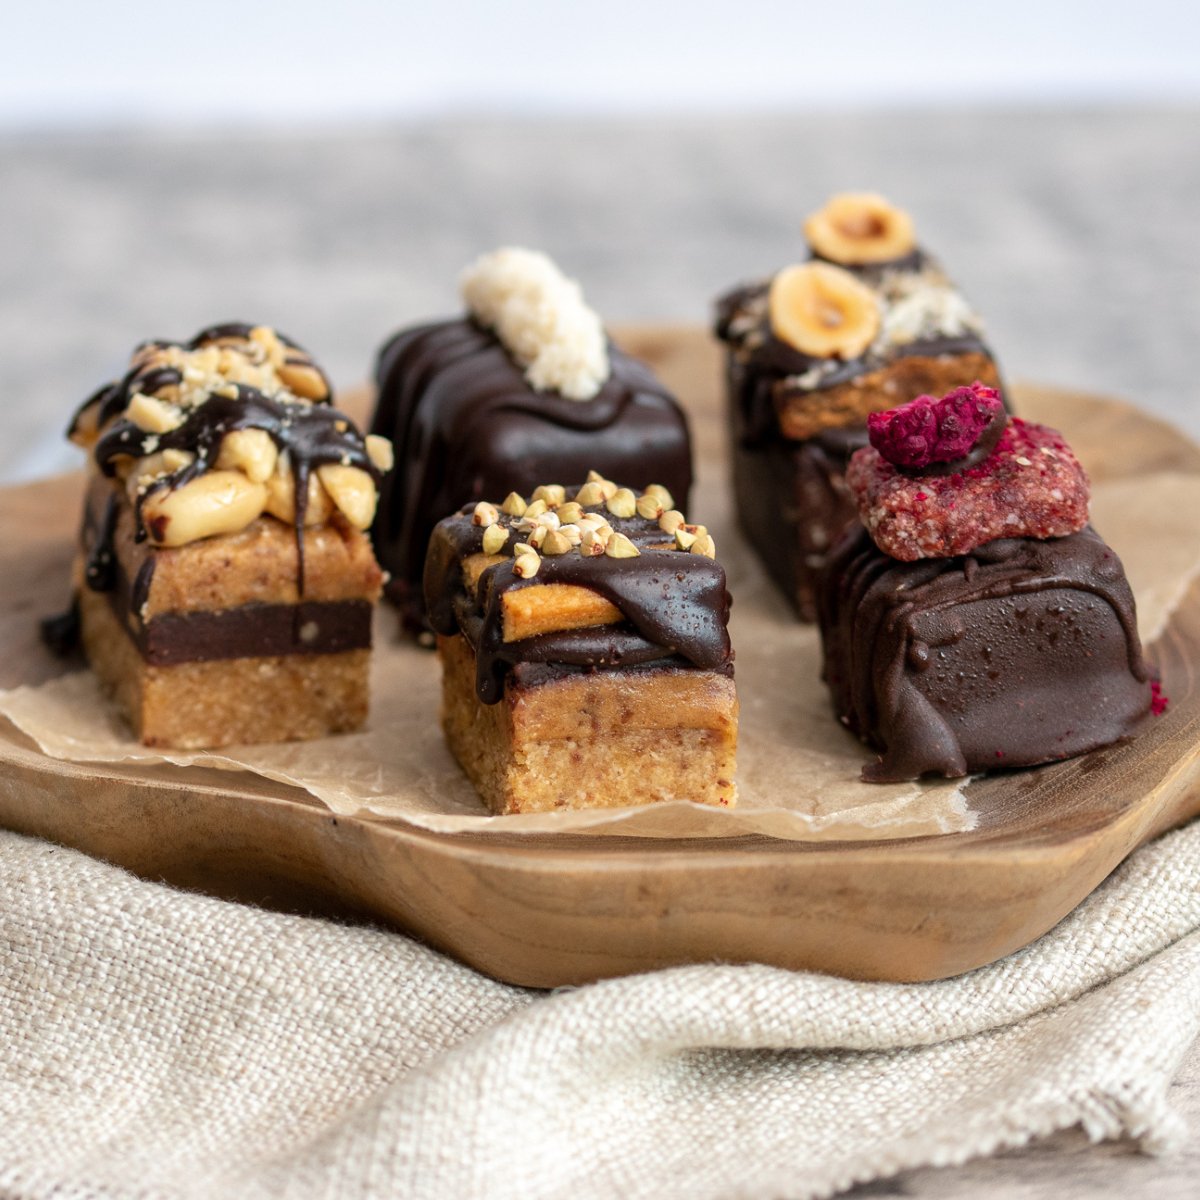 An assortment of Amee's Gourmet Raw Chocolate Treats on a wooden platter